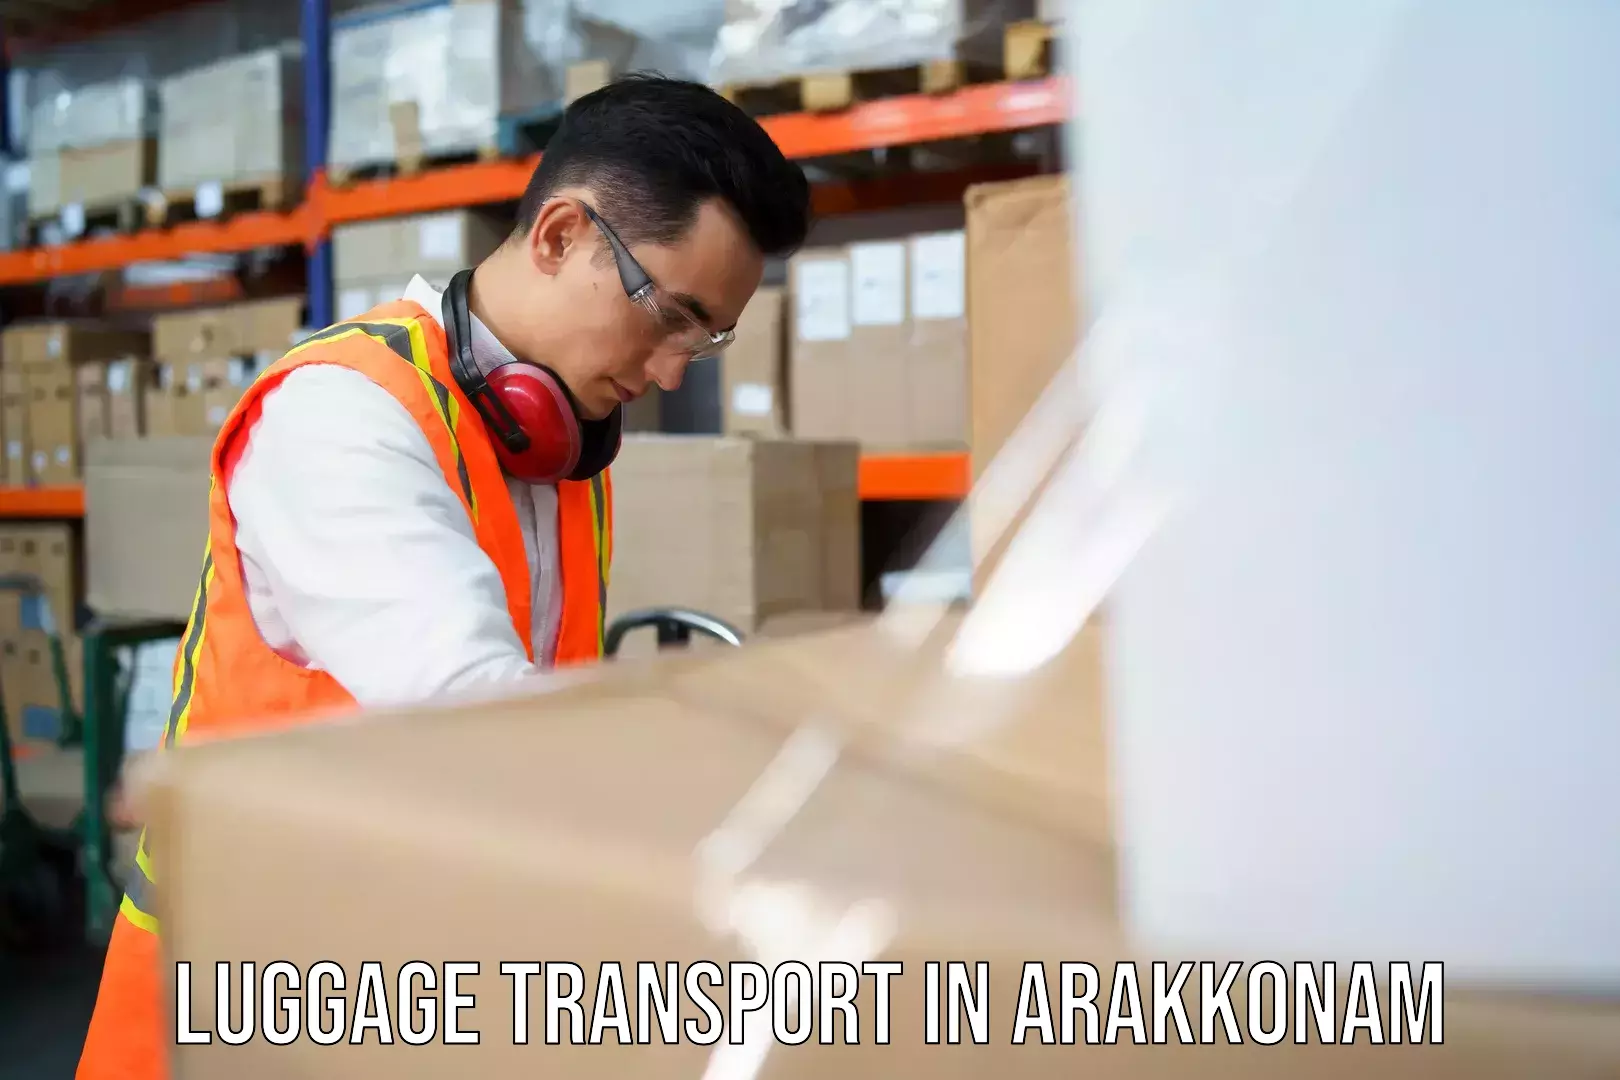 Corporate baggage transport in Arakkonam